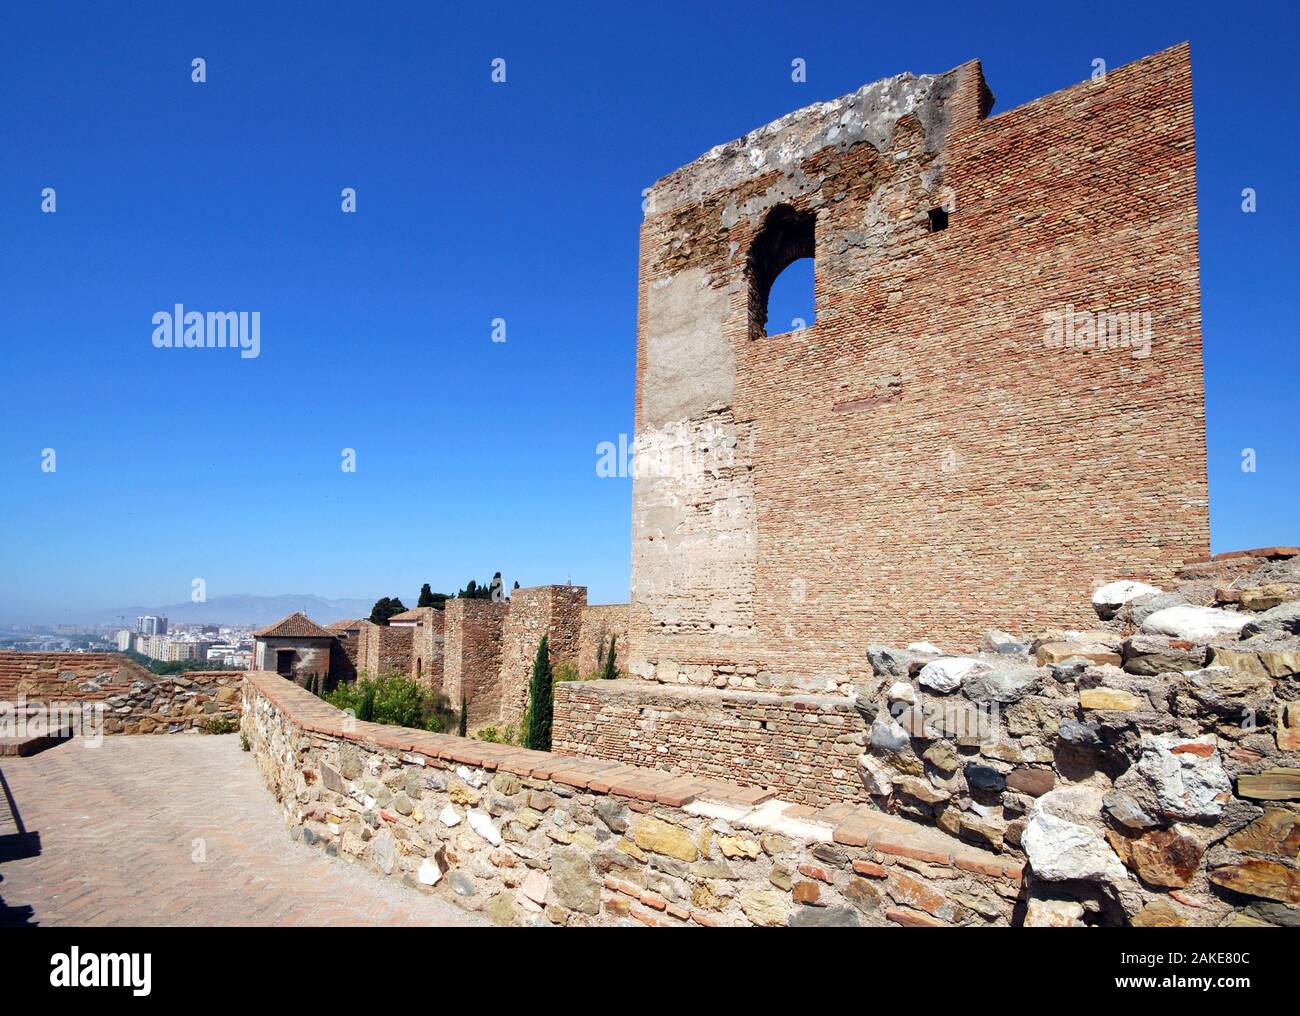 Upper walled precinct and tower of the citadel at Malaga castle, Malaga, Malaga Province, Andalucia, Spain, Europe. Stock Photo